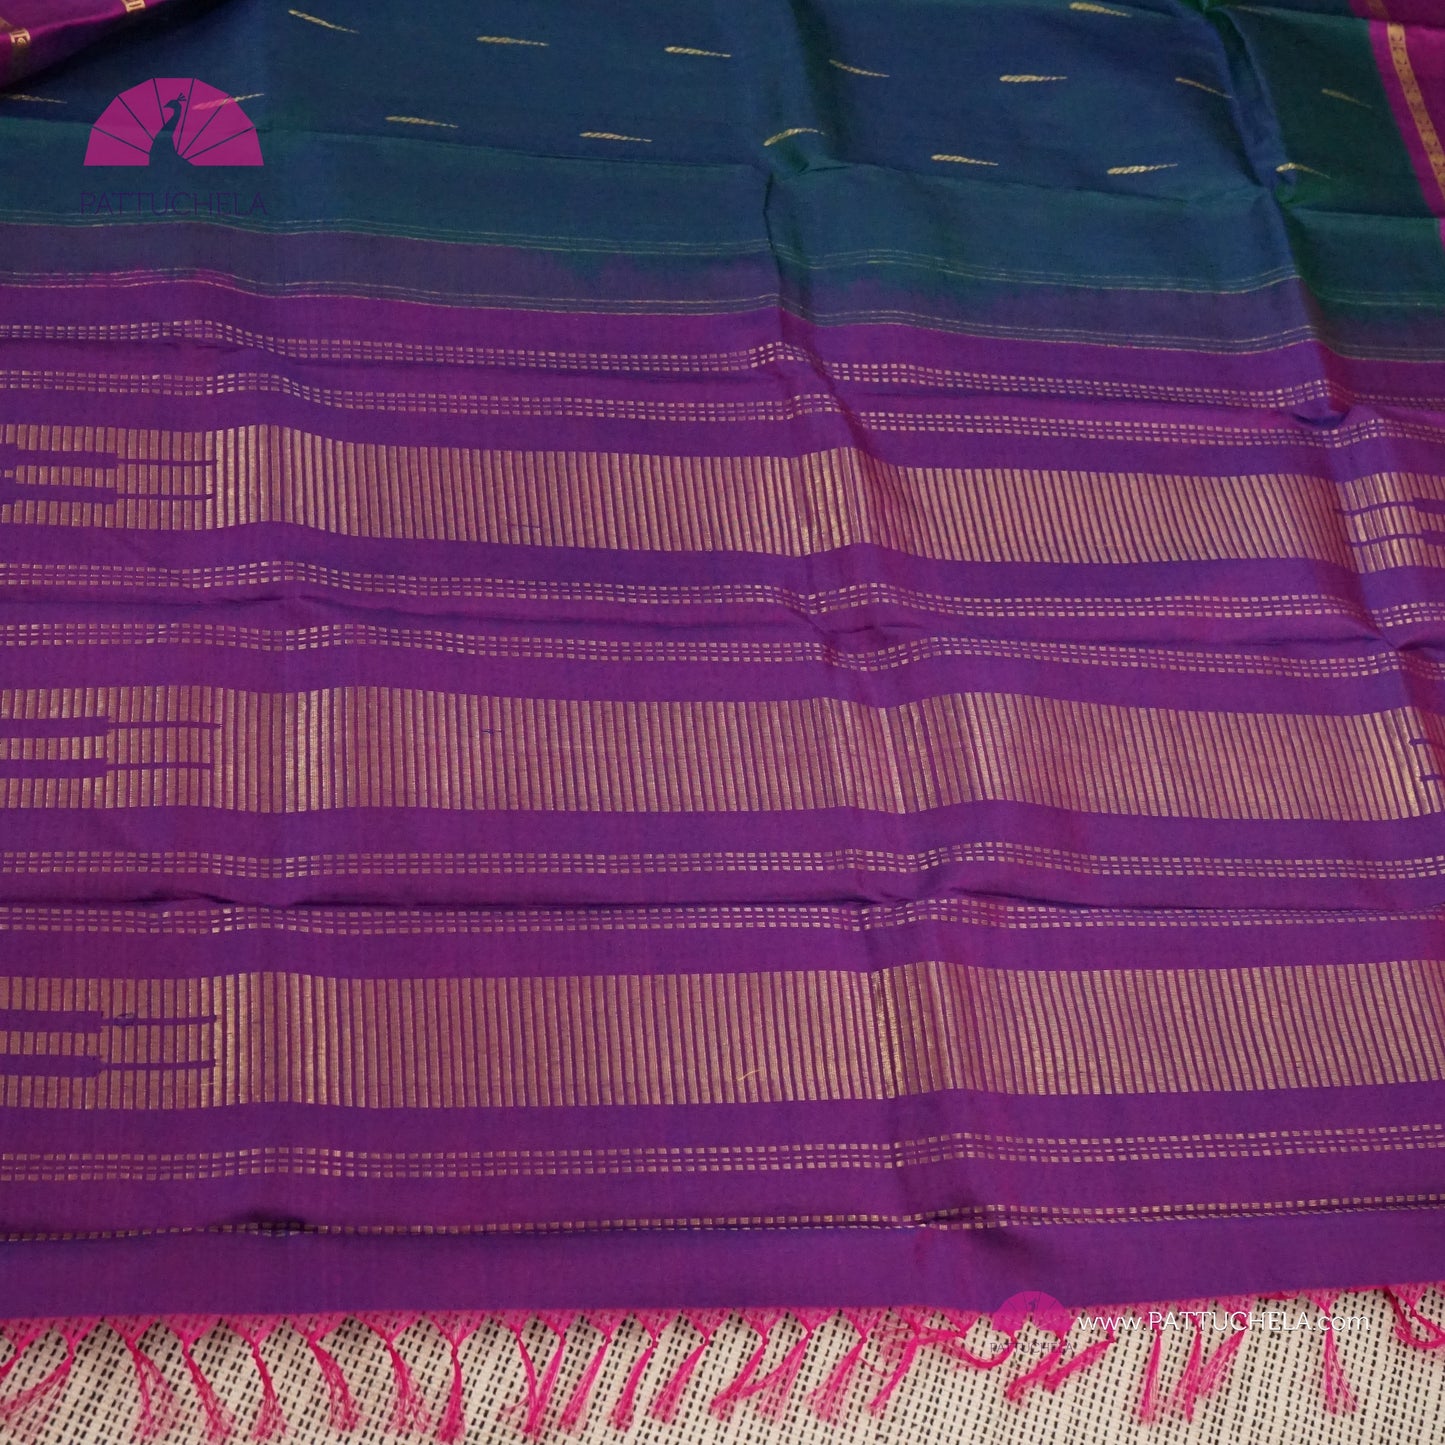 Dual Tone Kanchipuram Silk saree hued in Peacock Blue with contrast Purple Bentex Border | Droplet Motifs | Classic Kanchipuram | Wedding Saree | SILK MARK CERTIFIED | Kanjivaram Silks